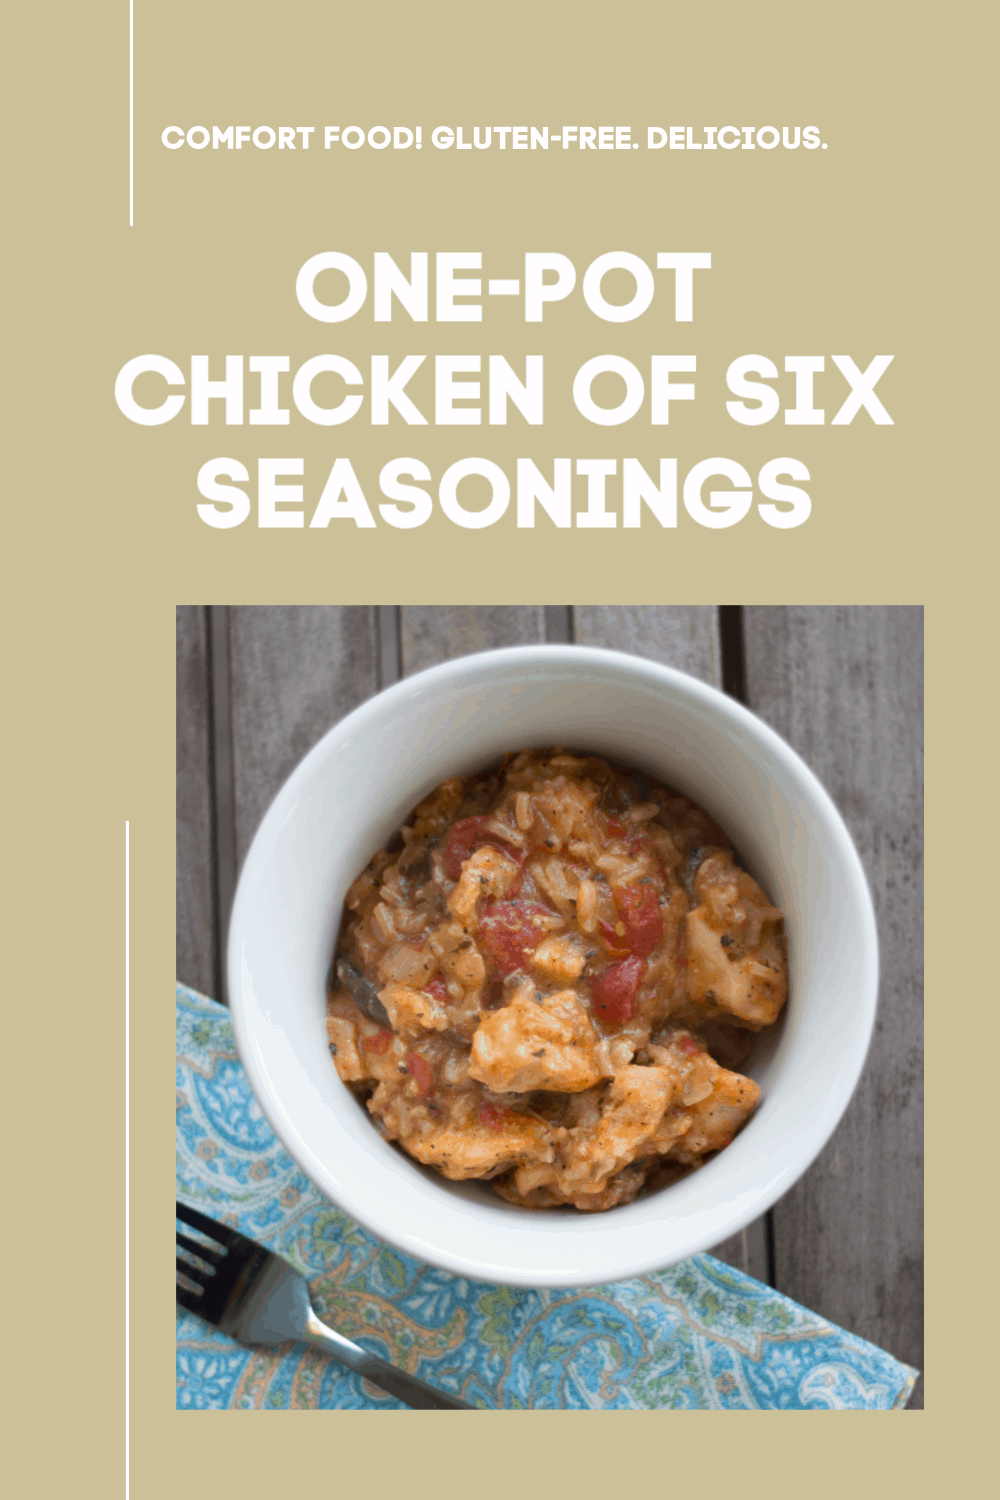 Chicken Of Six Seasonings in a bowl